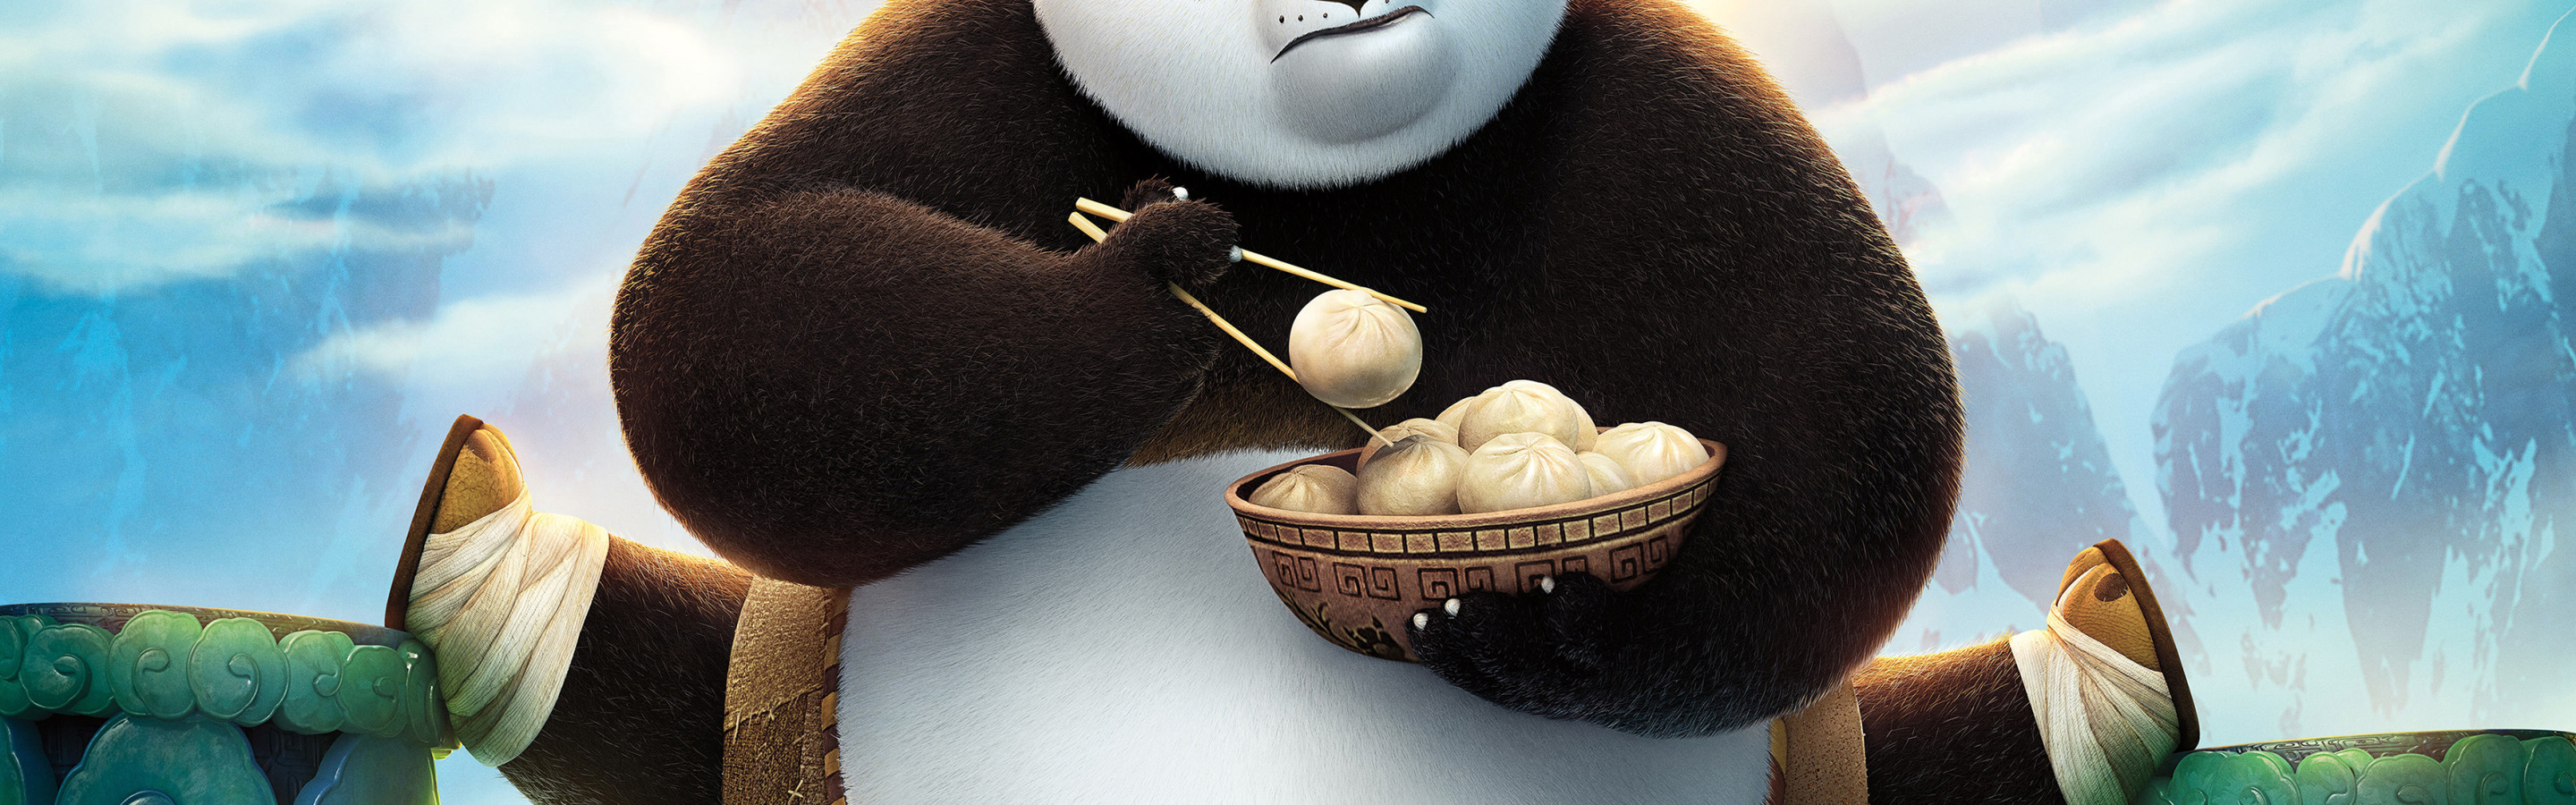 Сцена после титров кунфу панда 4. Кунг фу Панда ест печеньки. Любимое блюдо кунфу Панда.